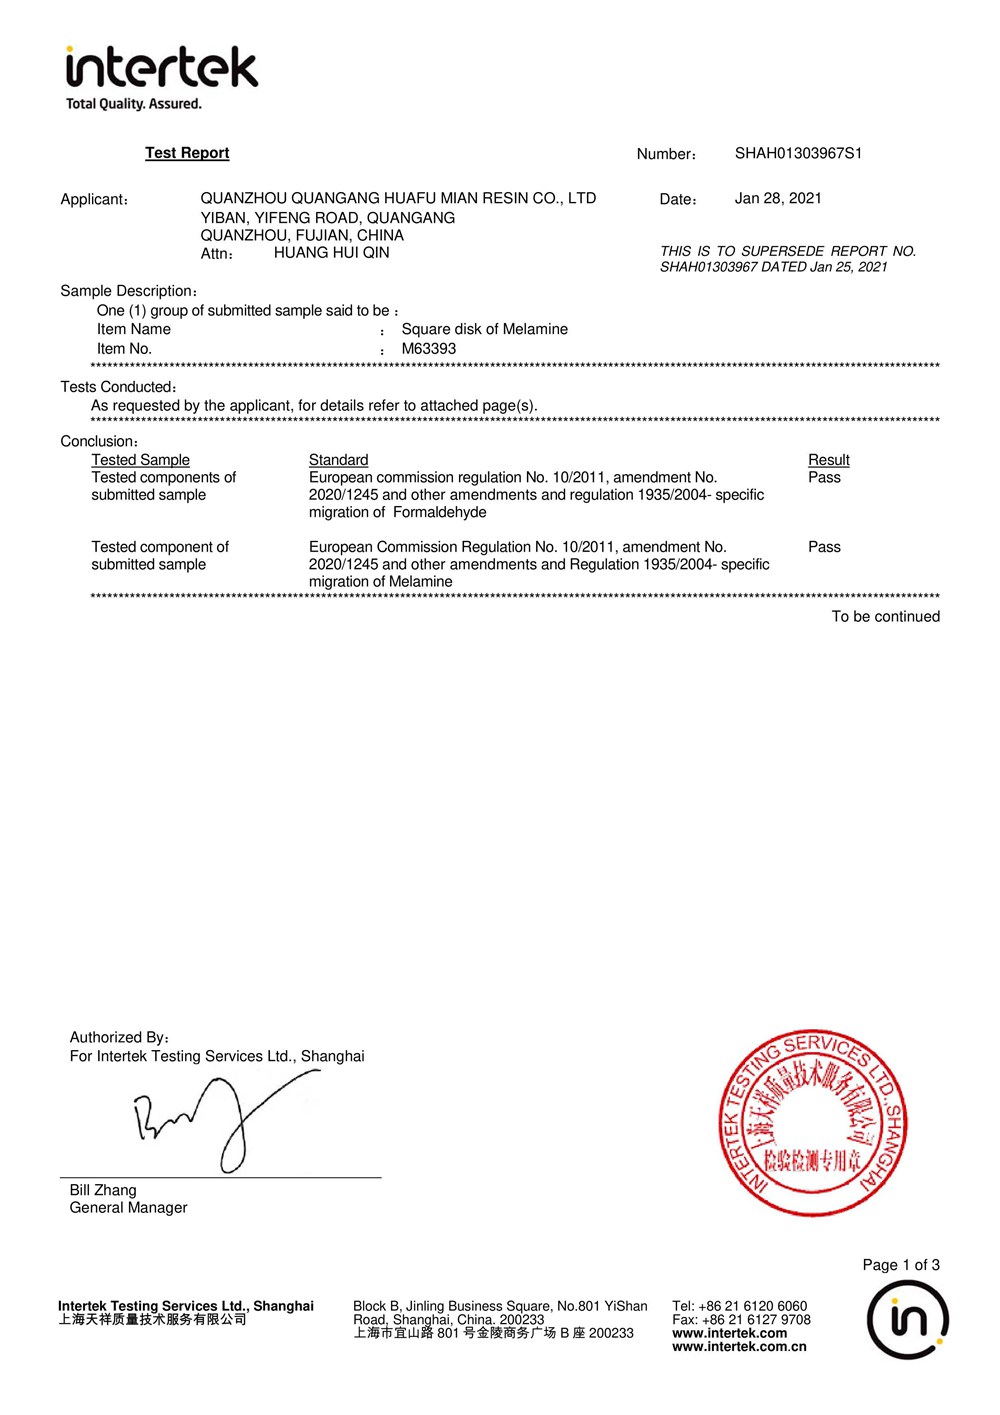 Huafu Chemicals：Intertek Certificate in 2021